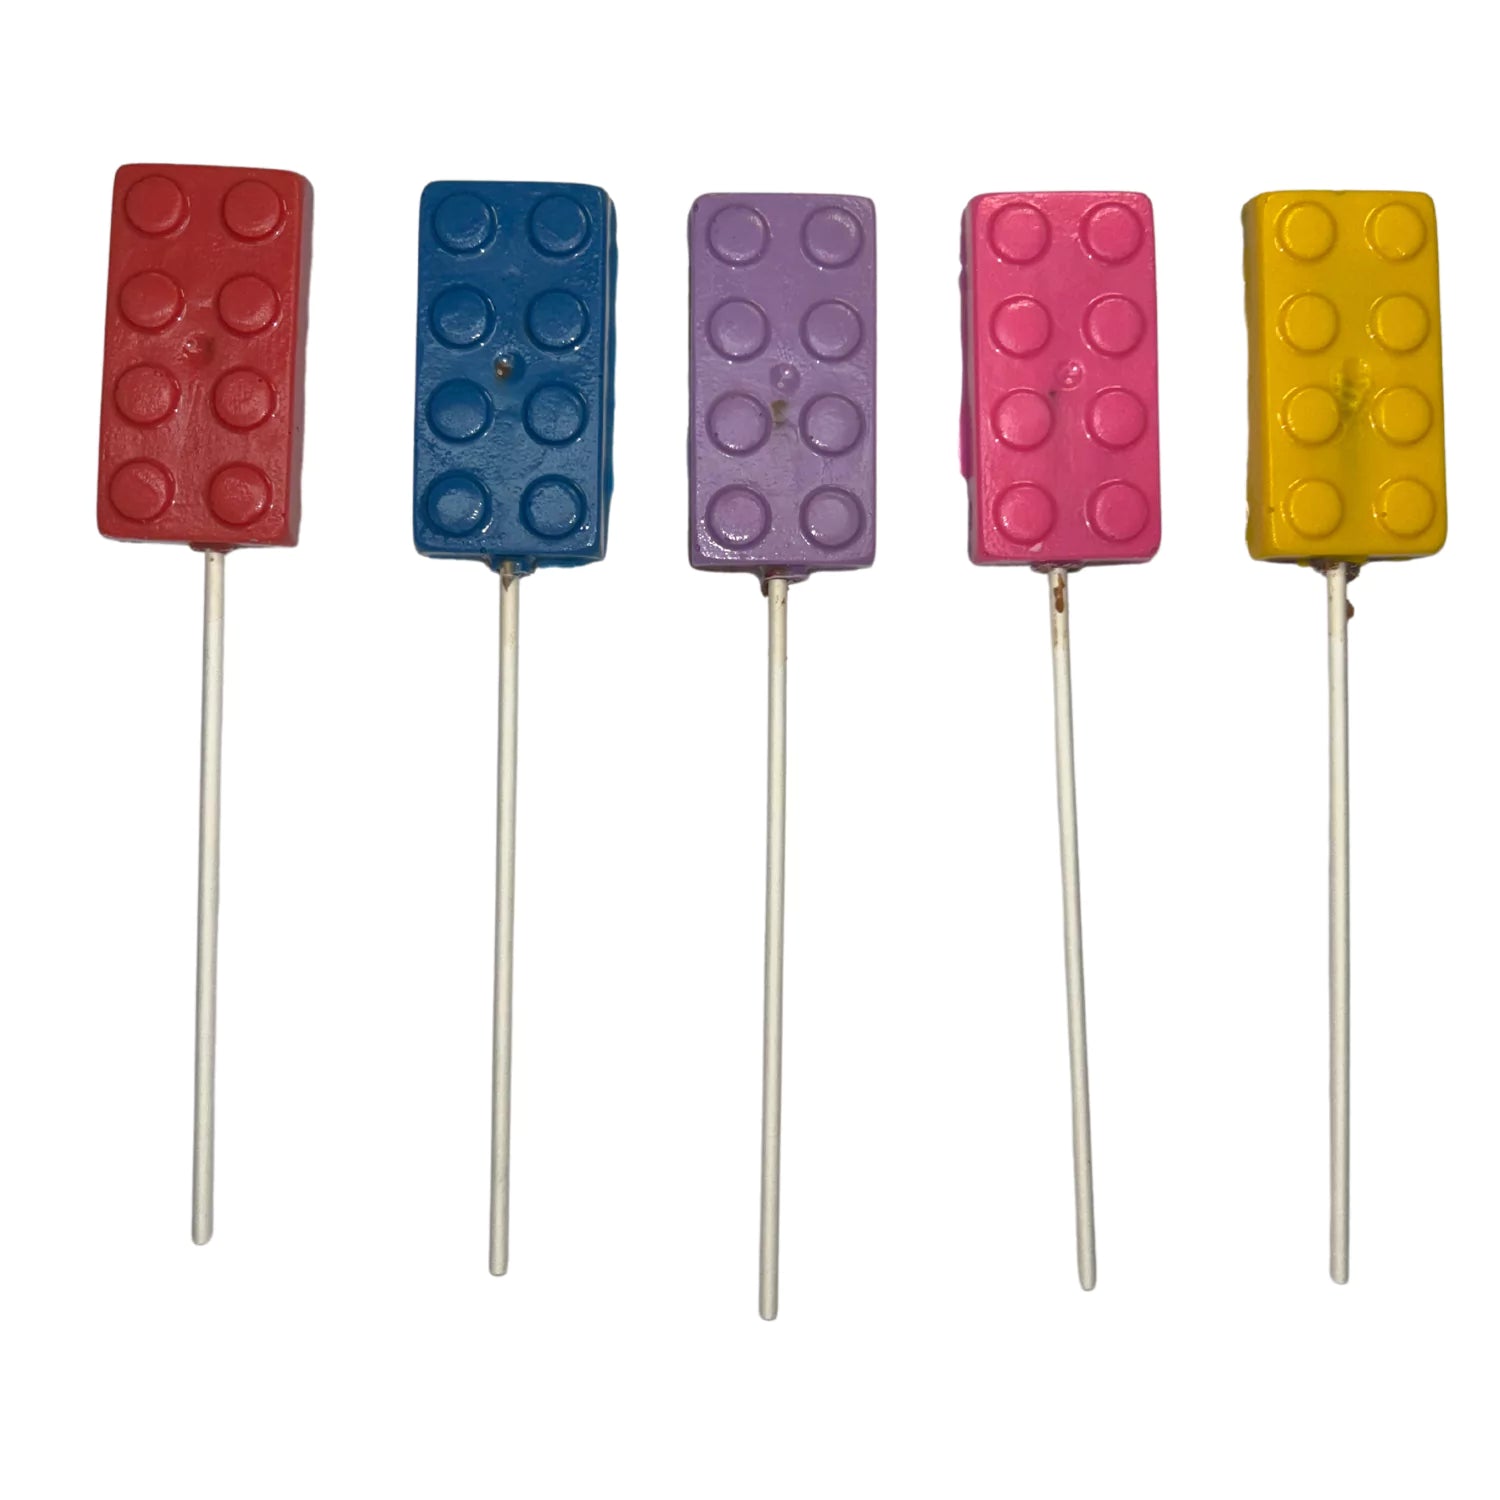 Assorted Colors Lego Brick Lollipop Sucker 0.9 oz White Chocolate Milk Chocolate